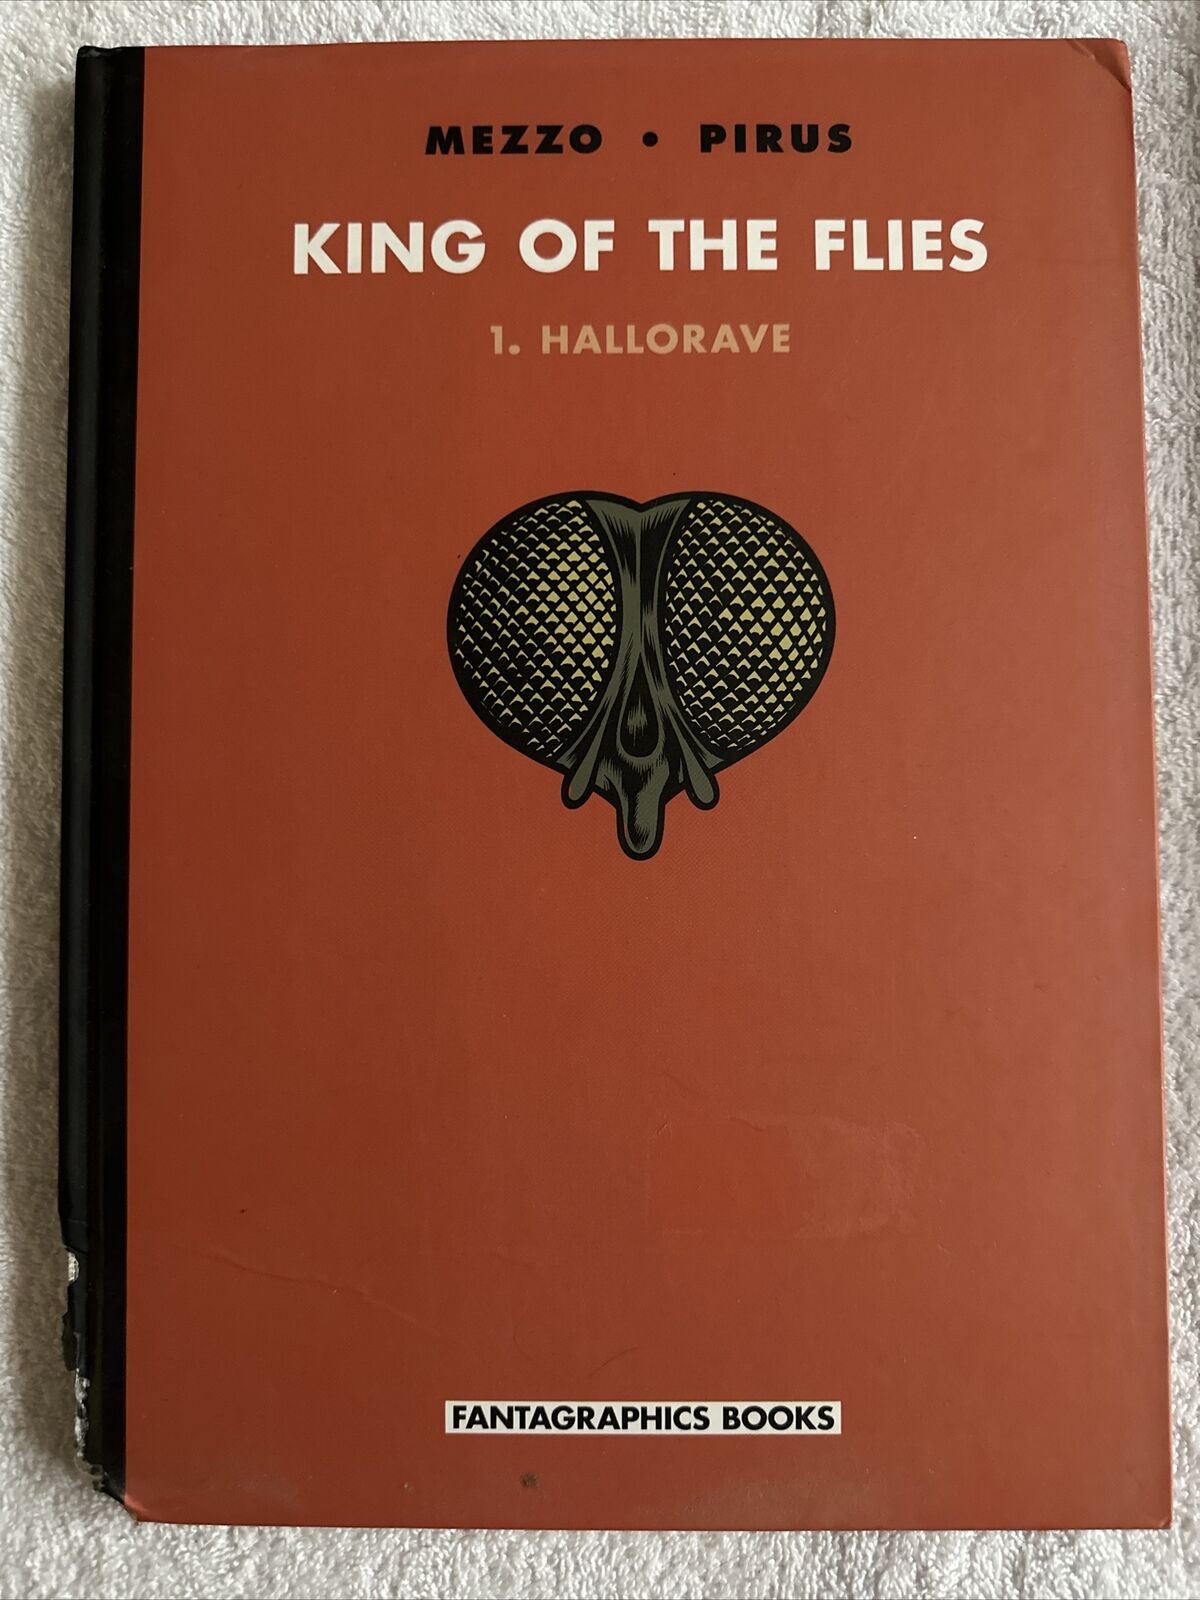 King of the Flies Volume 12010 Mezzo Pirus Fantagraphics Books